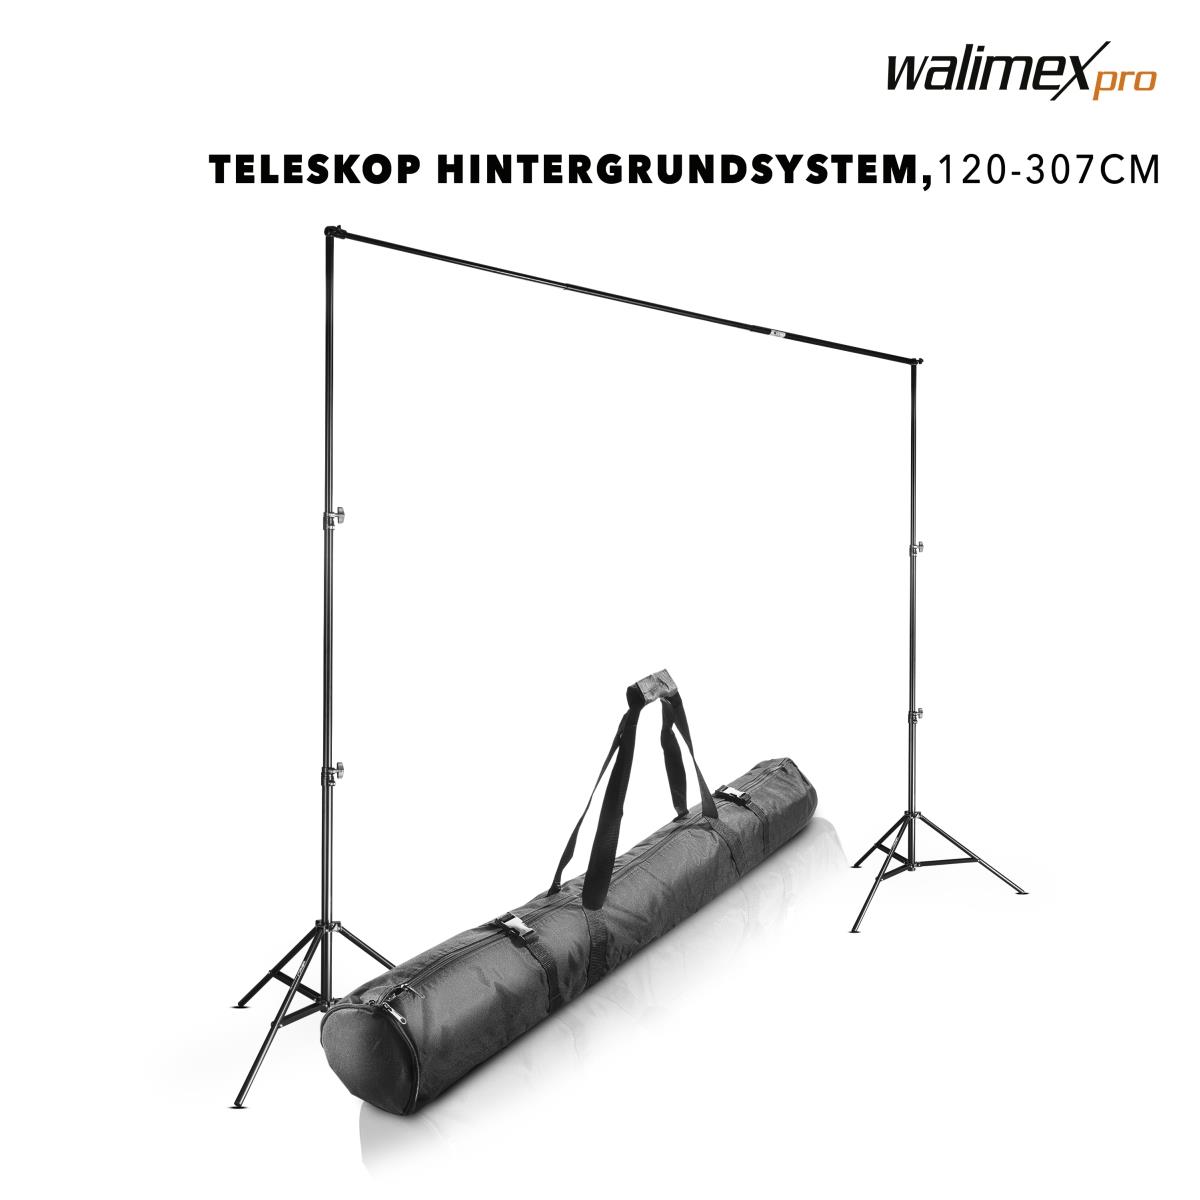 Walimex pro Teleskop Hintergrundsystem L 120-307cm